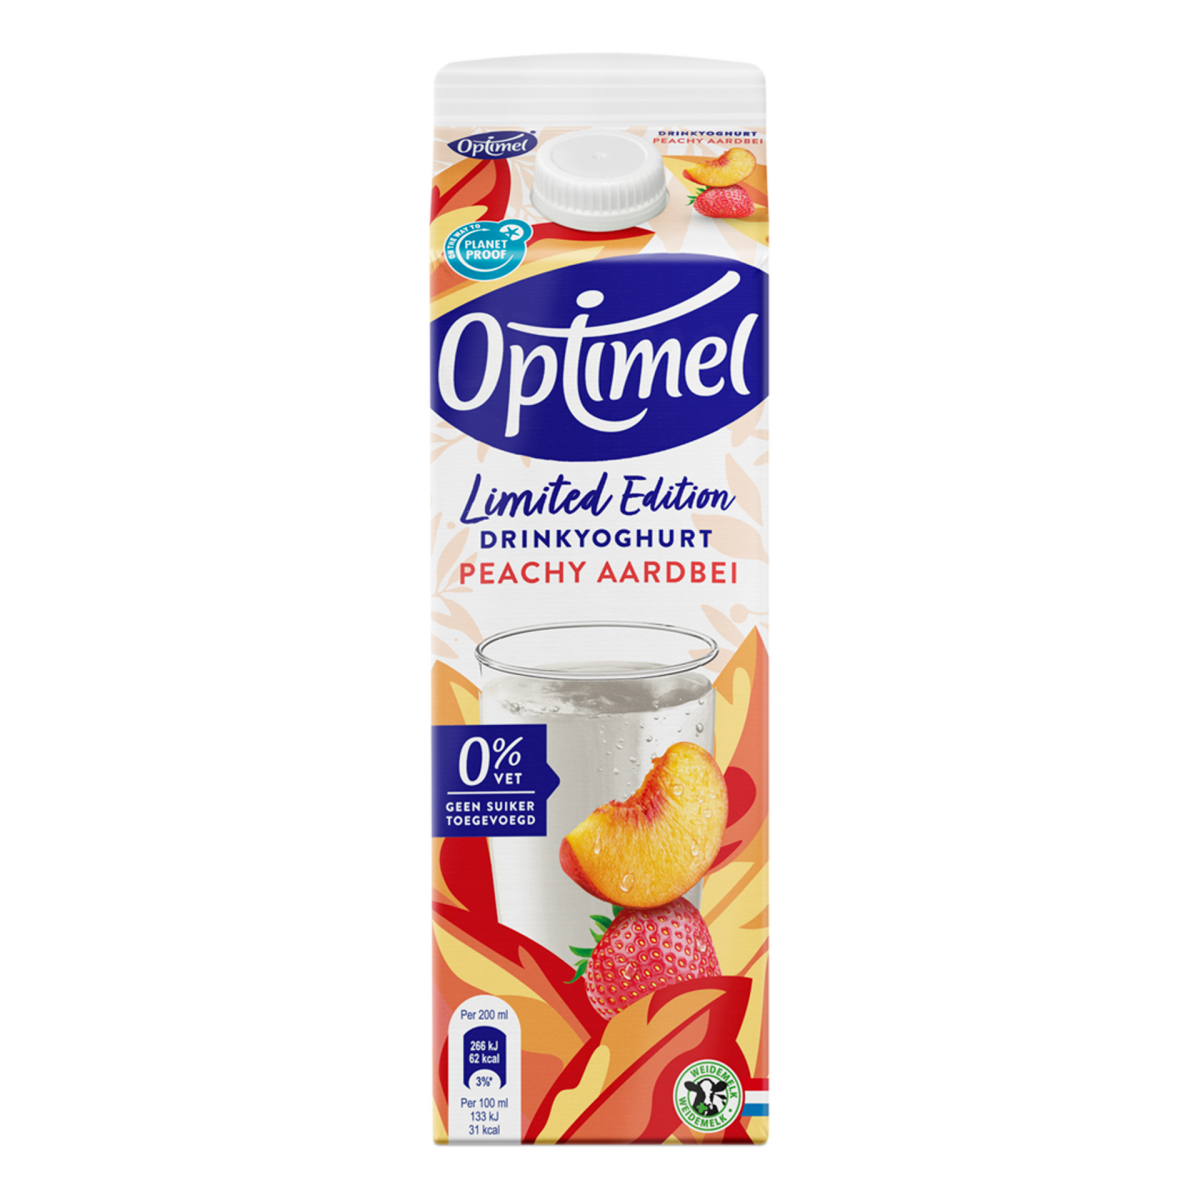 Optimel Drinkyoghurt limited edition Peachy Aardbei 0% vet 1L